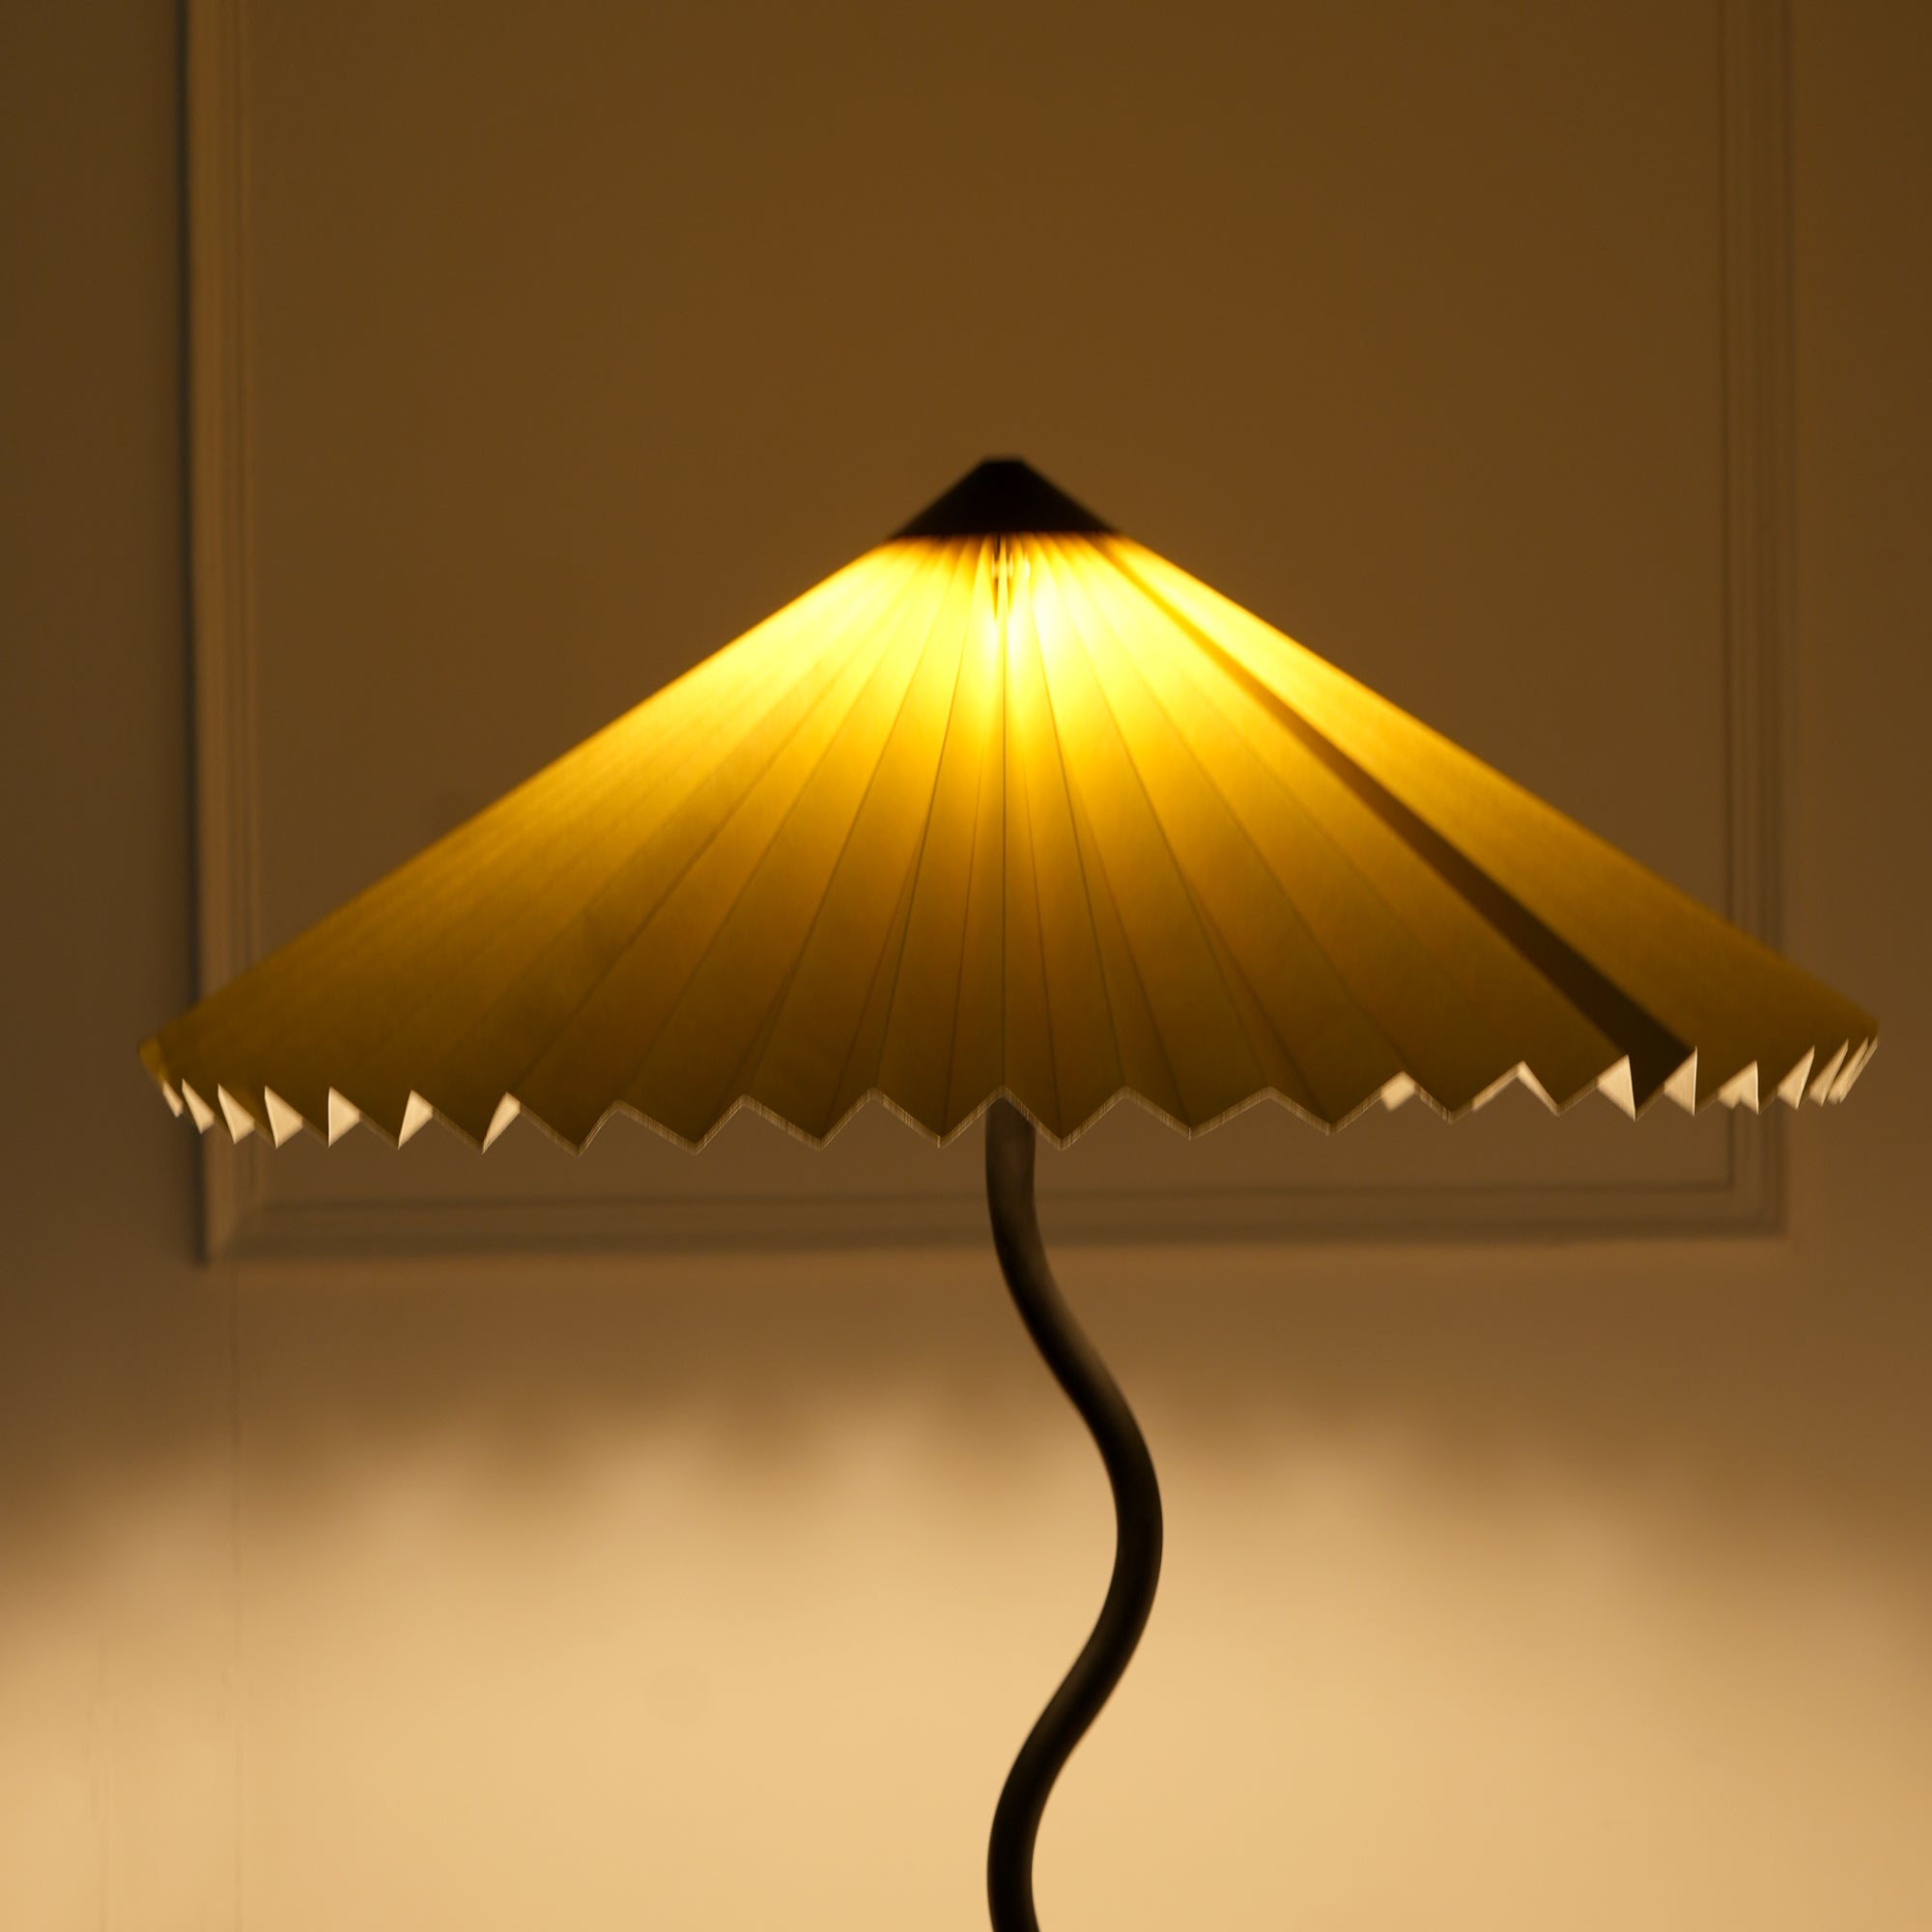 Wavy Floor Lamp - Contemporary Metal Base Lighting with Handpleated Shade